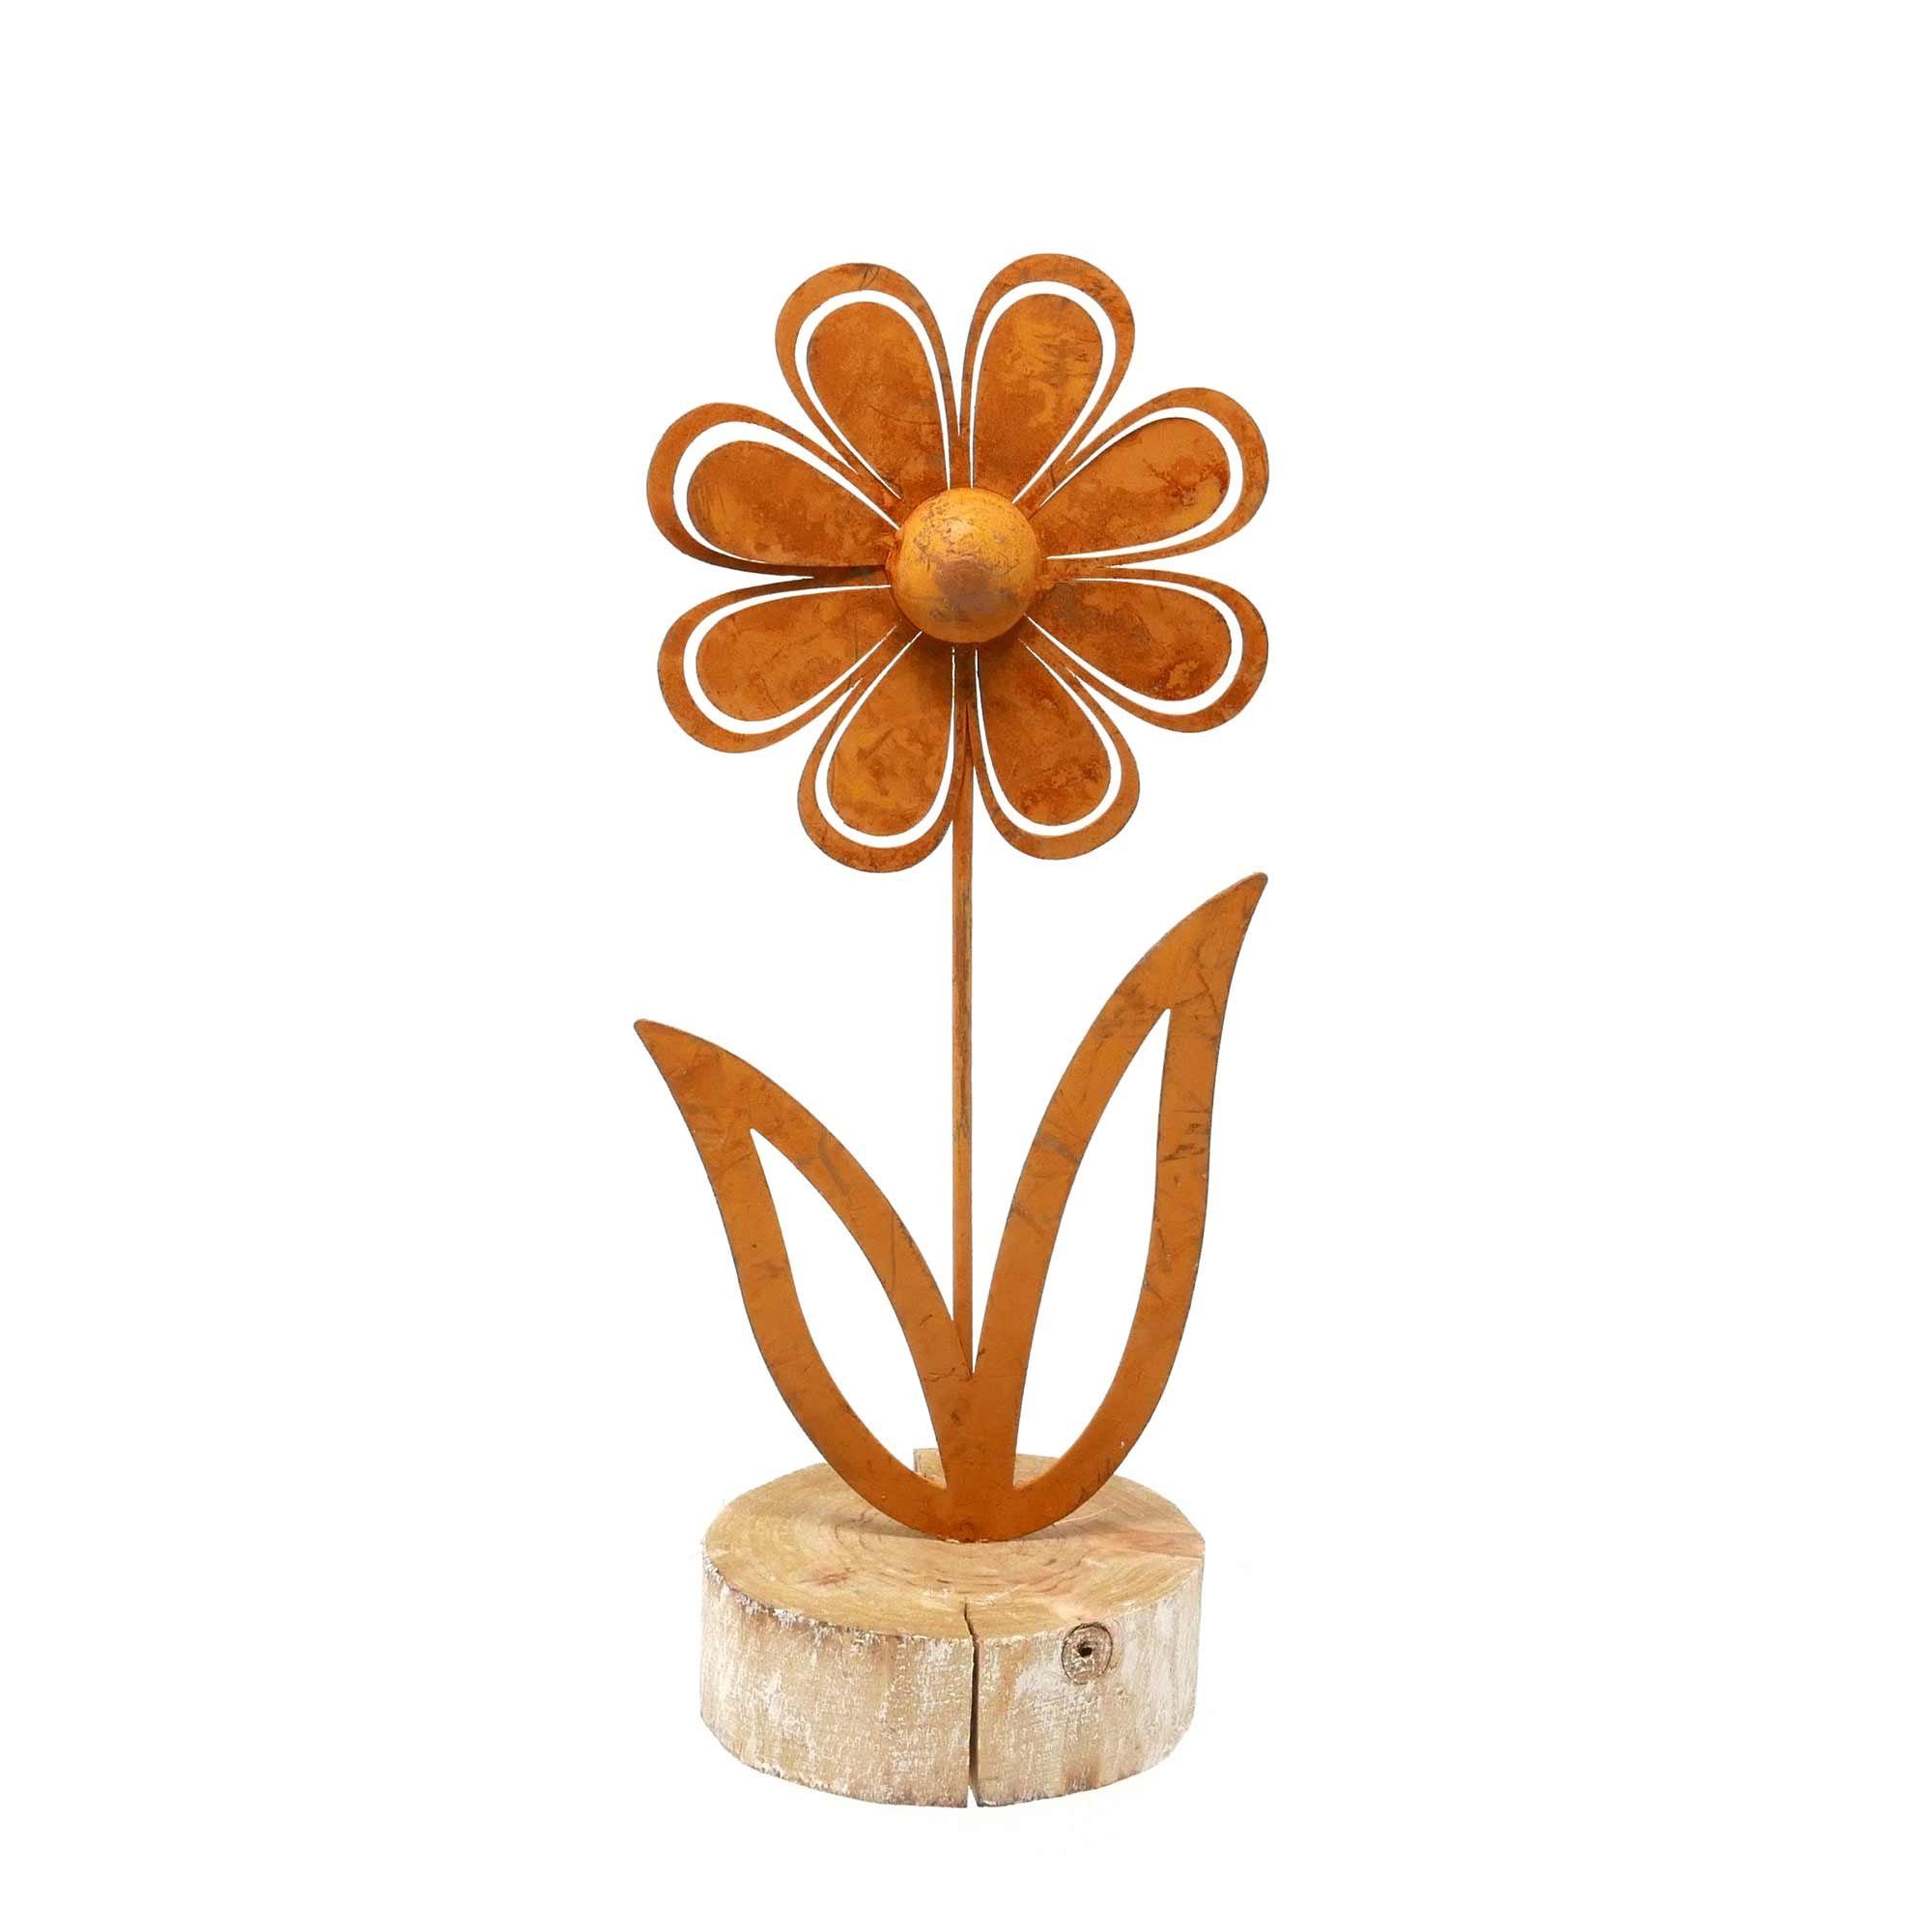 B&S Dekofigur Blume Rost Metall auf Holzfuß H 21 cm